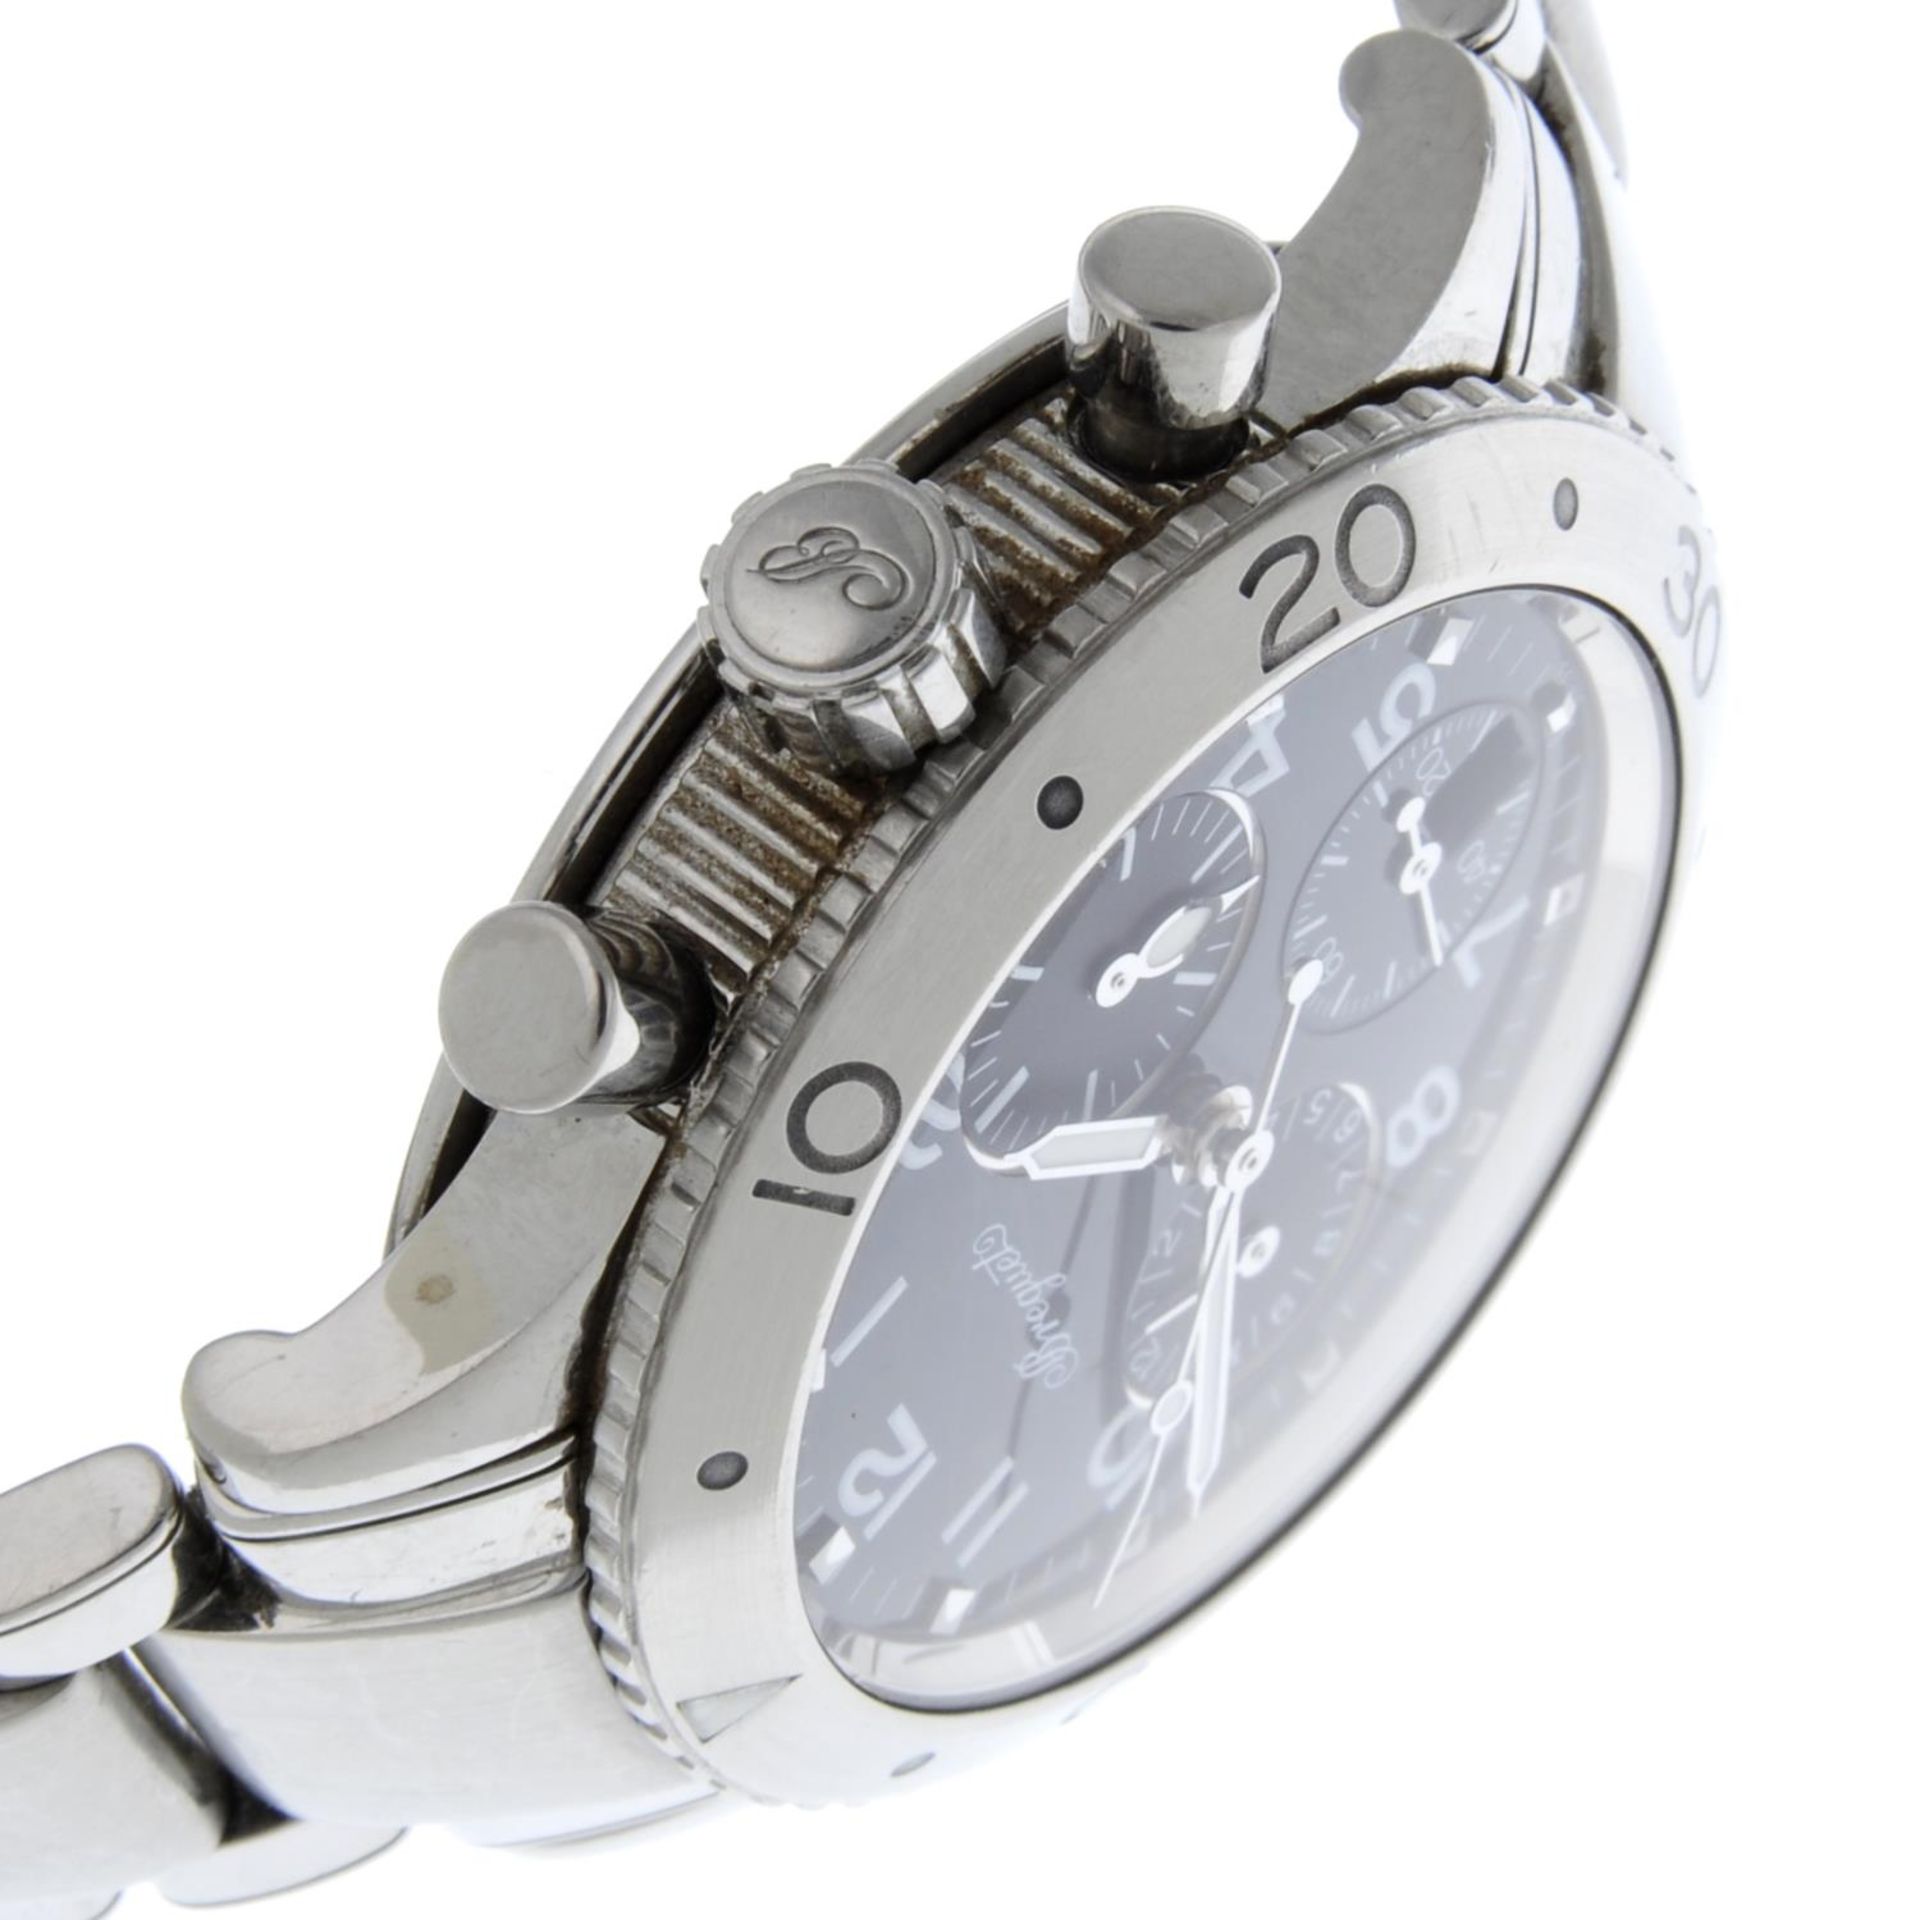 BREGUET - a Type XX chronographbracelet watch. - Image 5 of 6